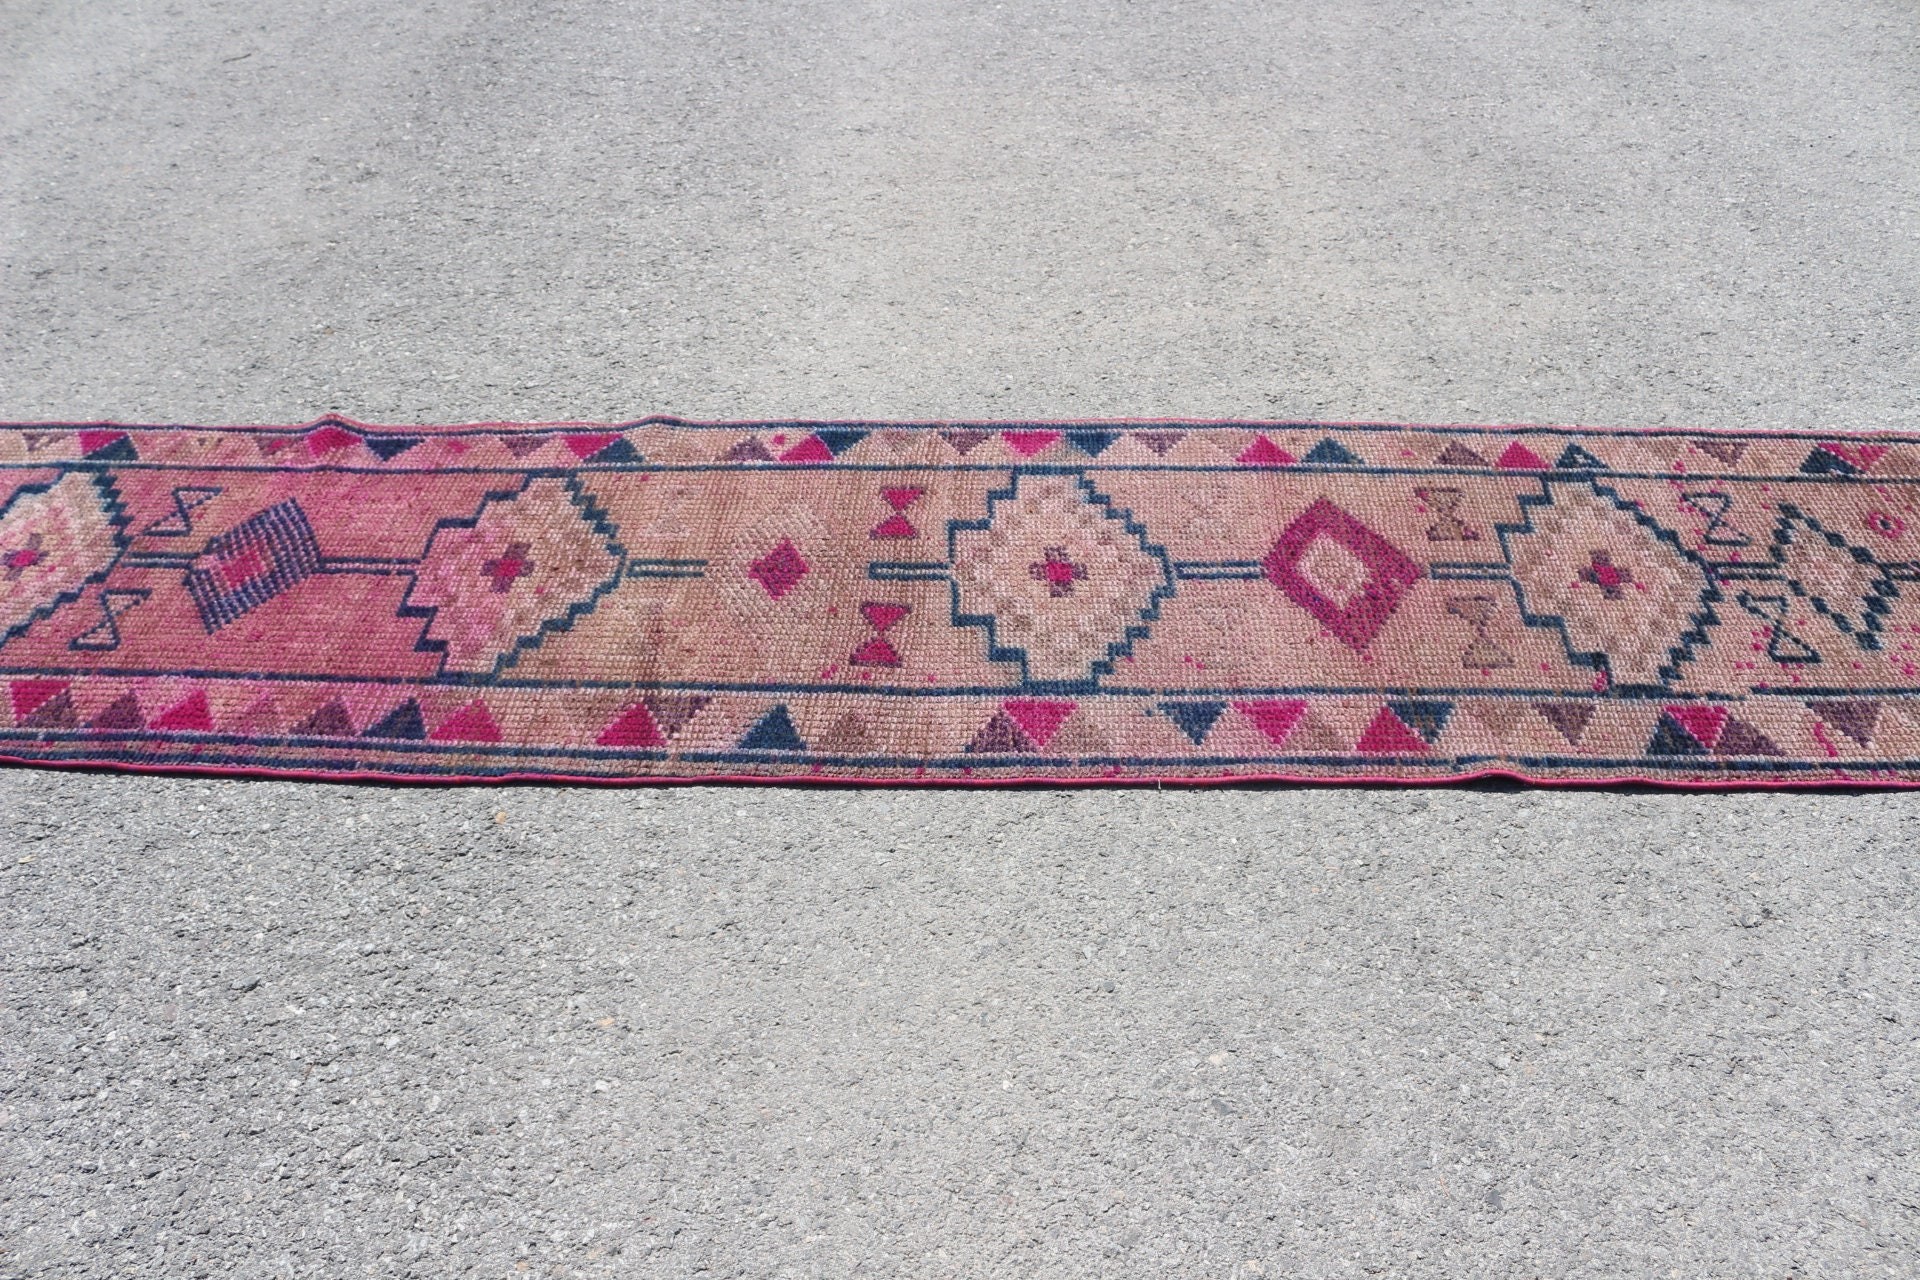 Stair Rug, Turkish Rugs, Anatolian Rugs, Office Rug, Kitchen Rug, Wool Rug, Pink Home Decor Rugs, 2.5x11.2 ft Runner Rugs, Vintage Rugs